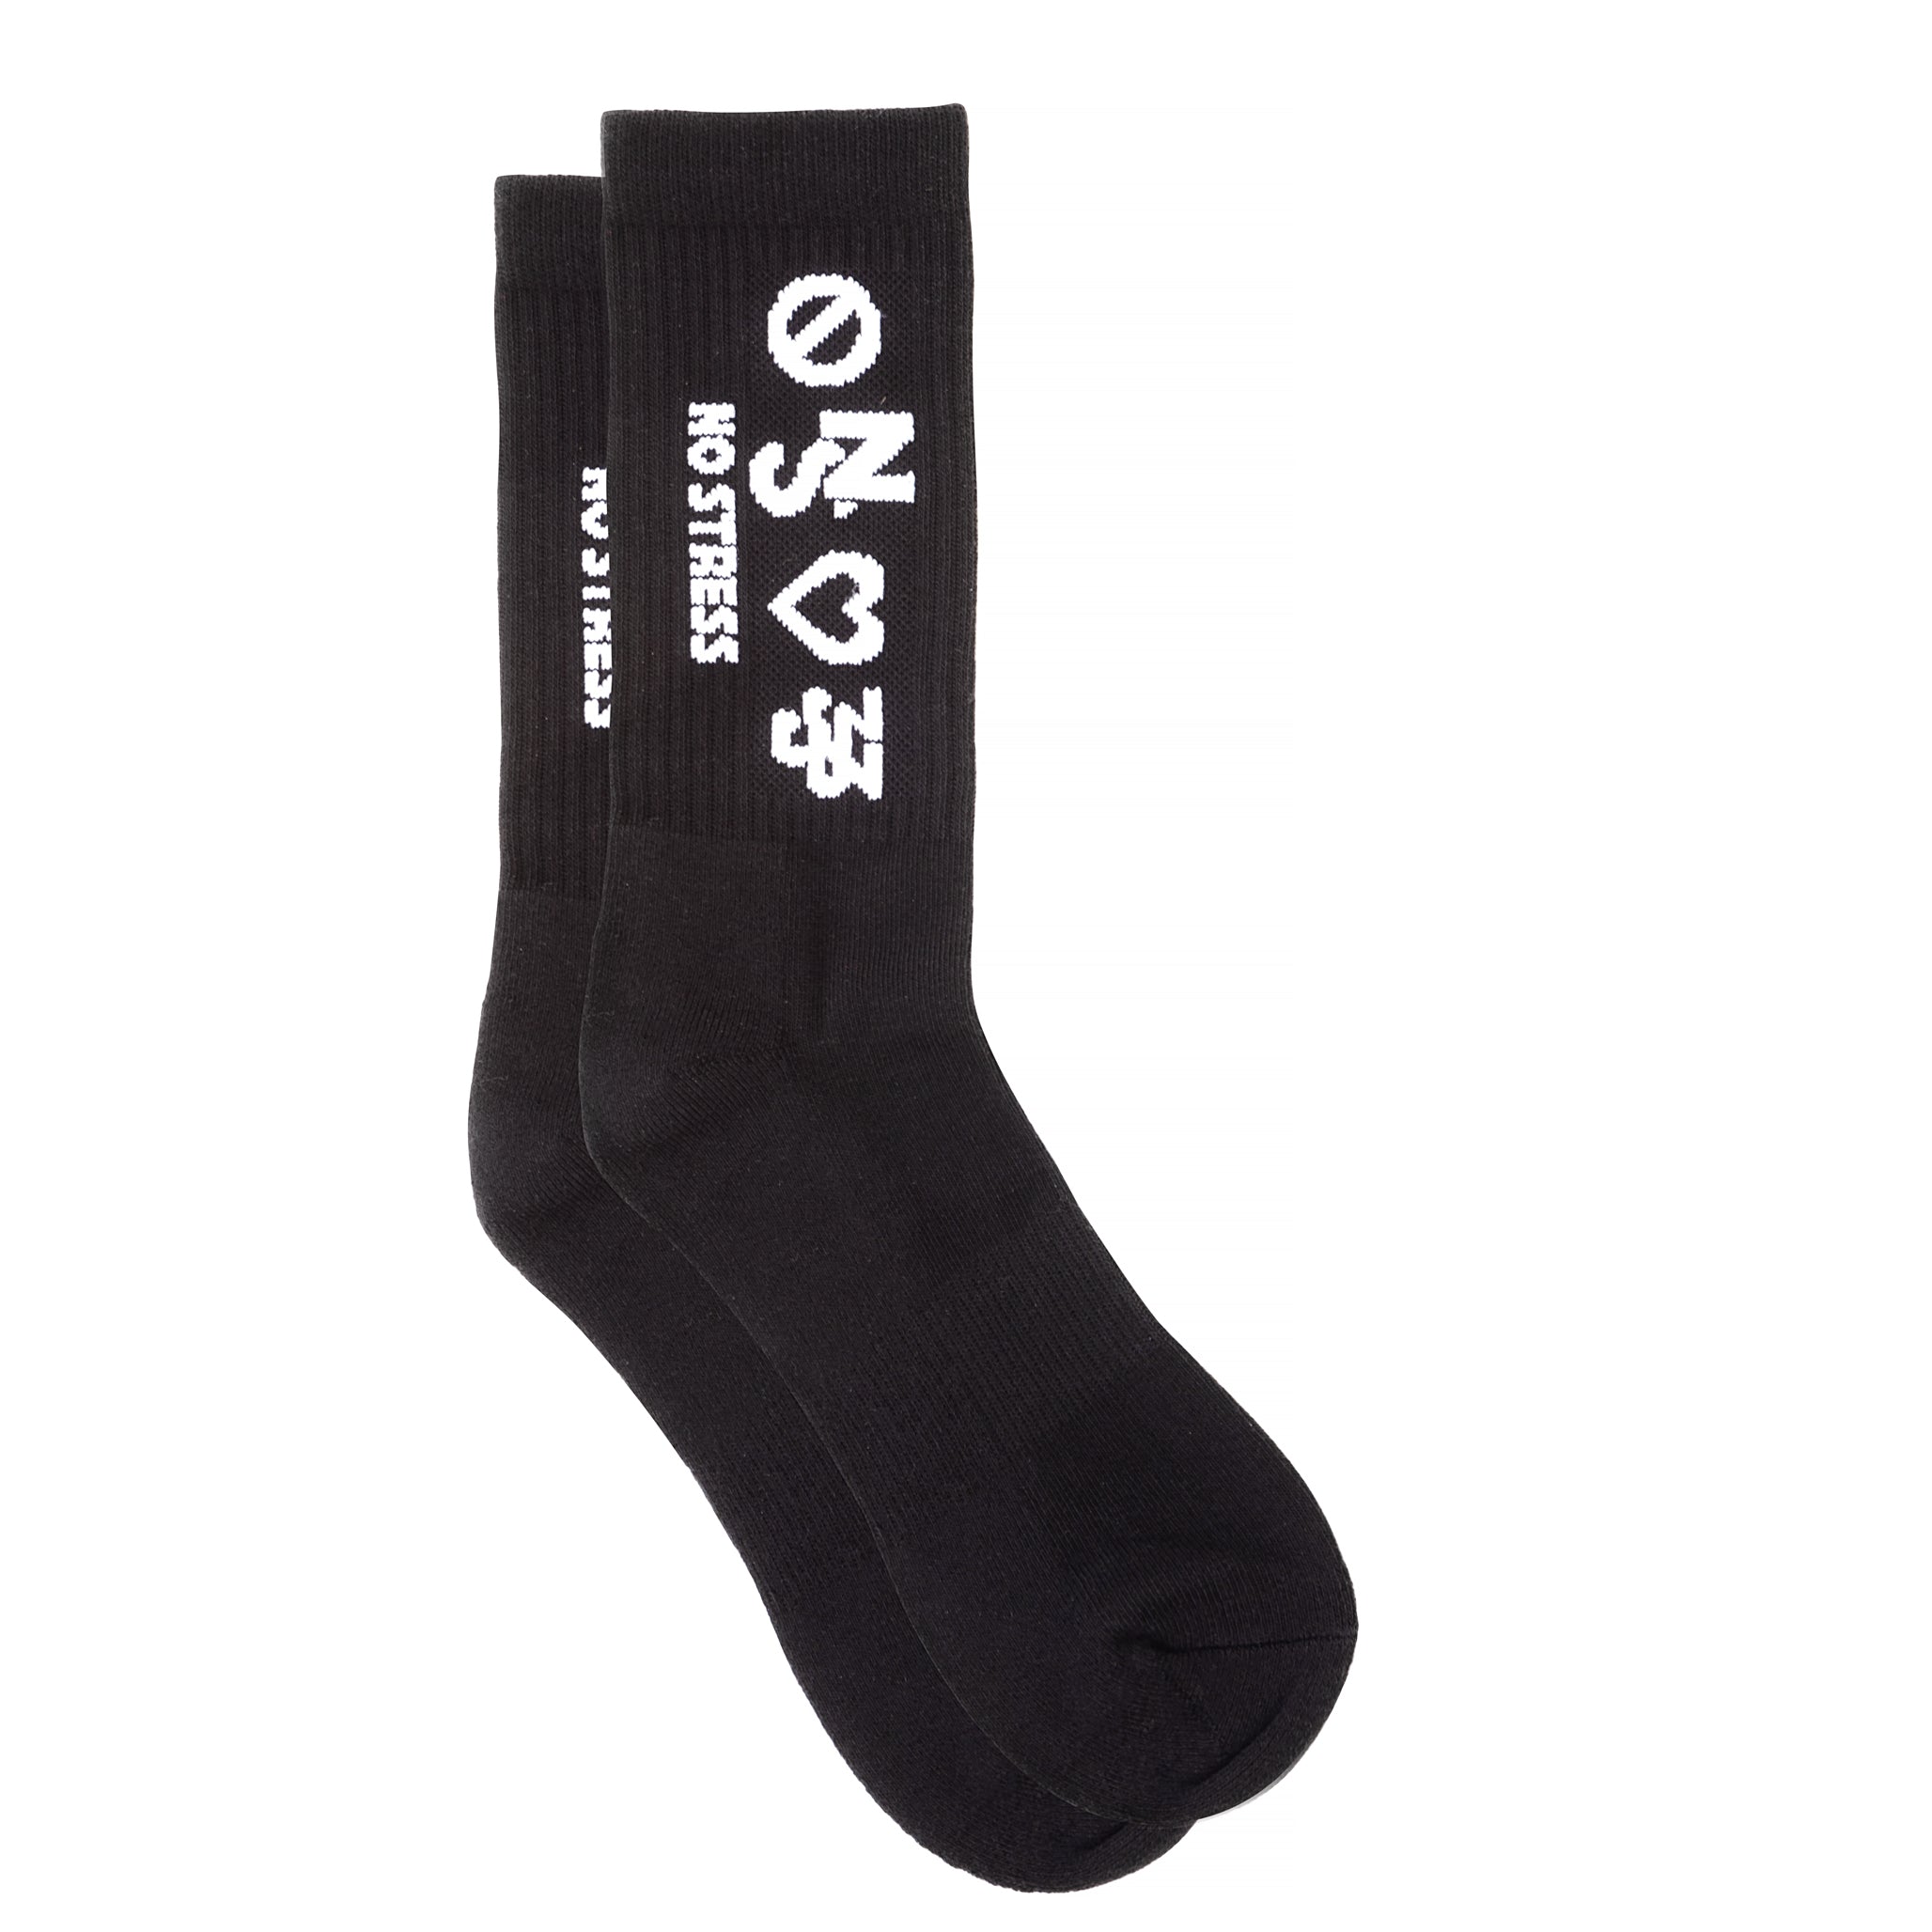 NS Logo Socks - x3 pack - No Stress Wear